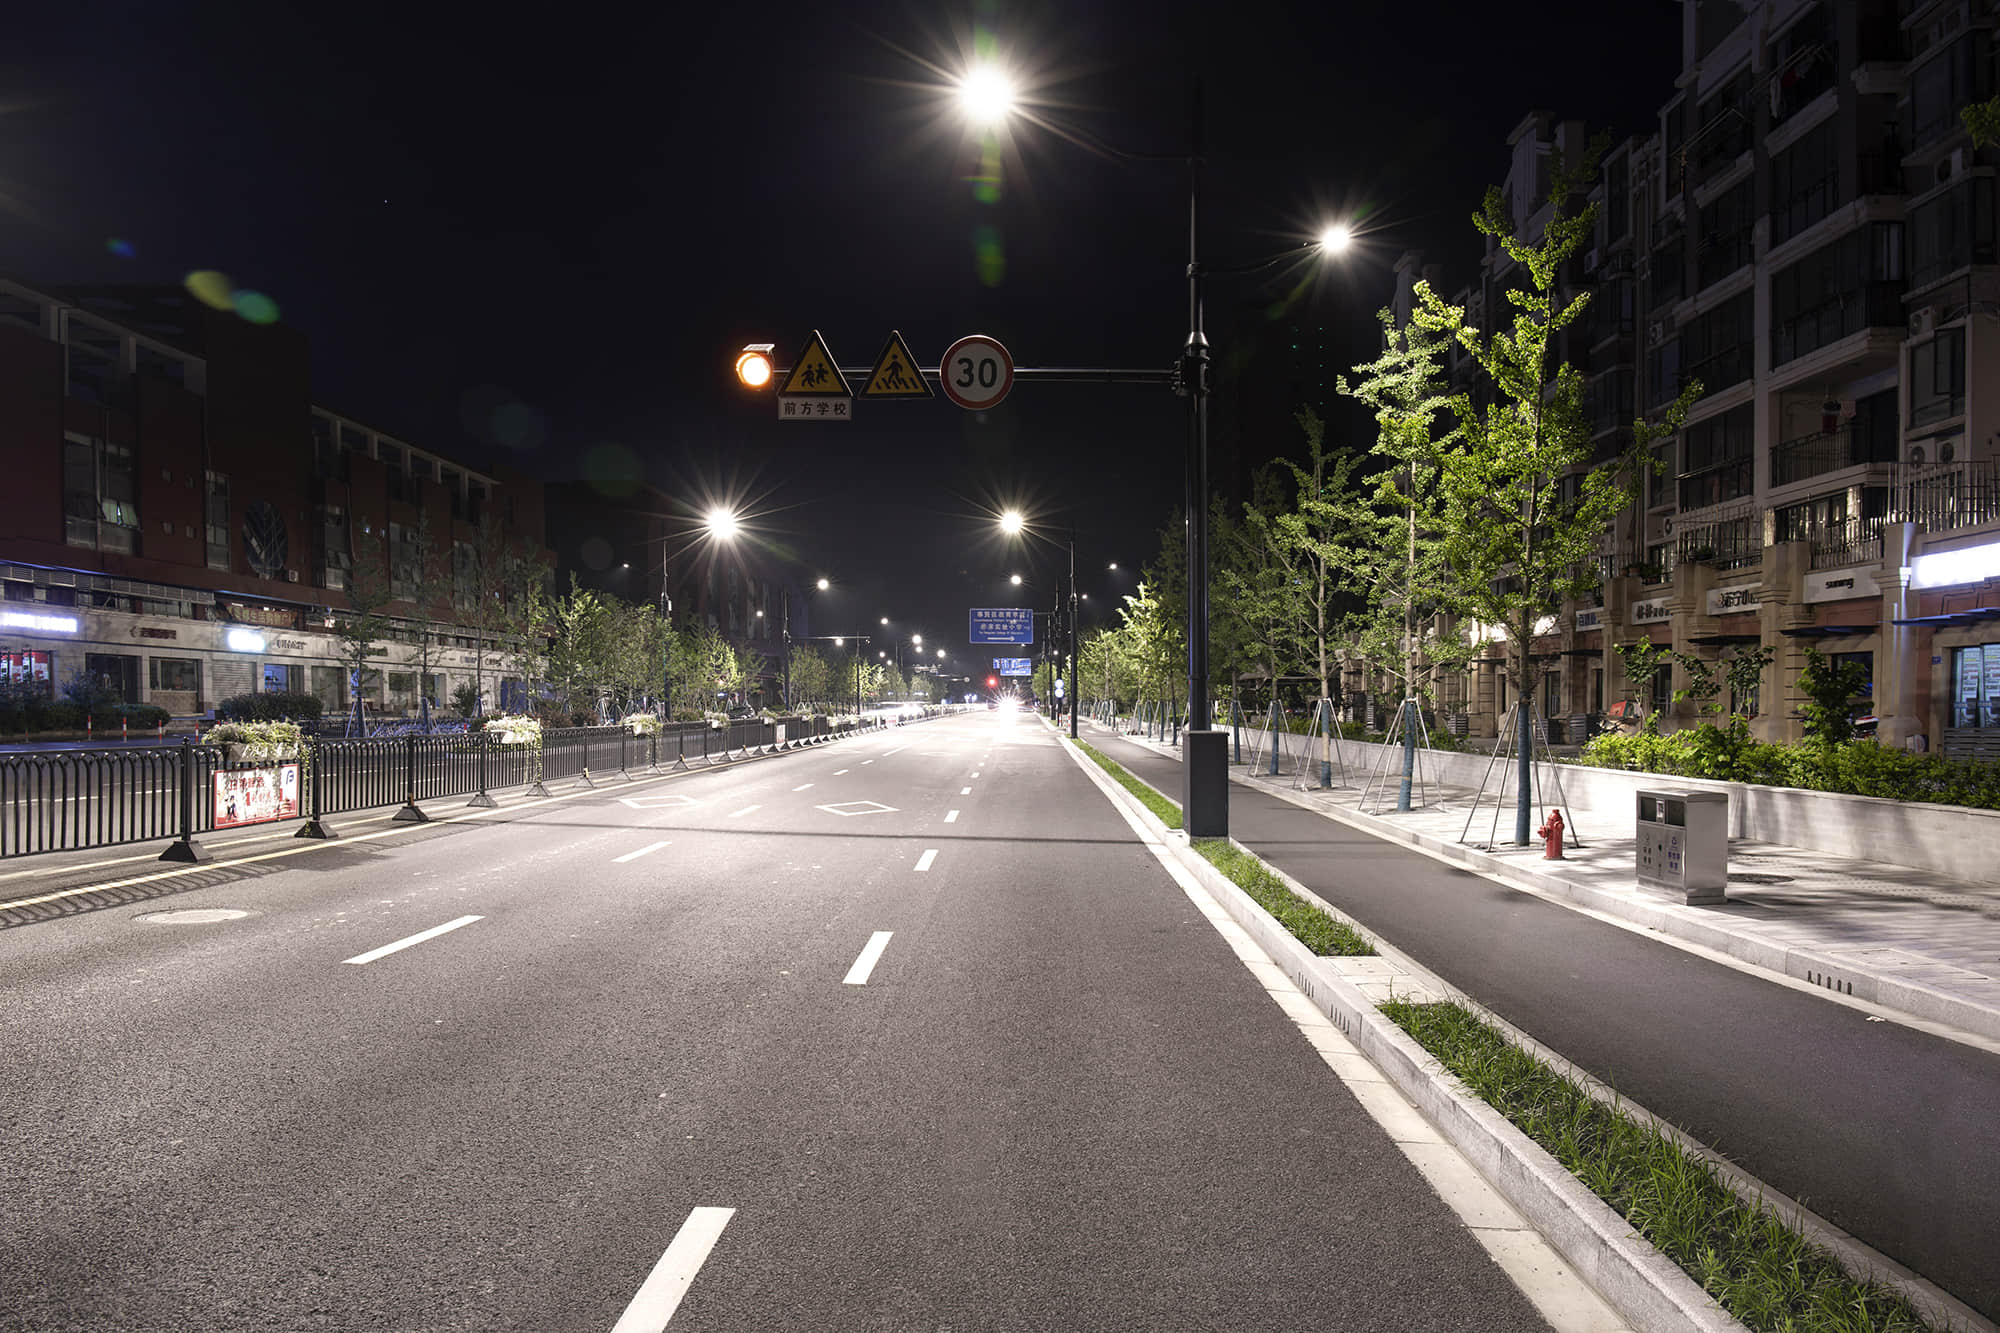 Municipal road lighting